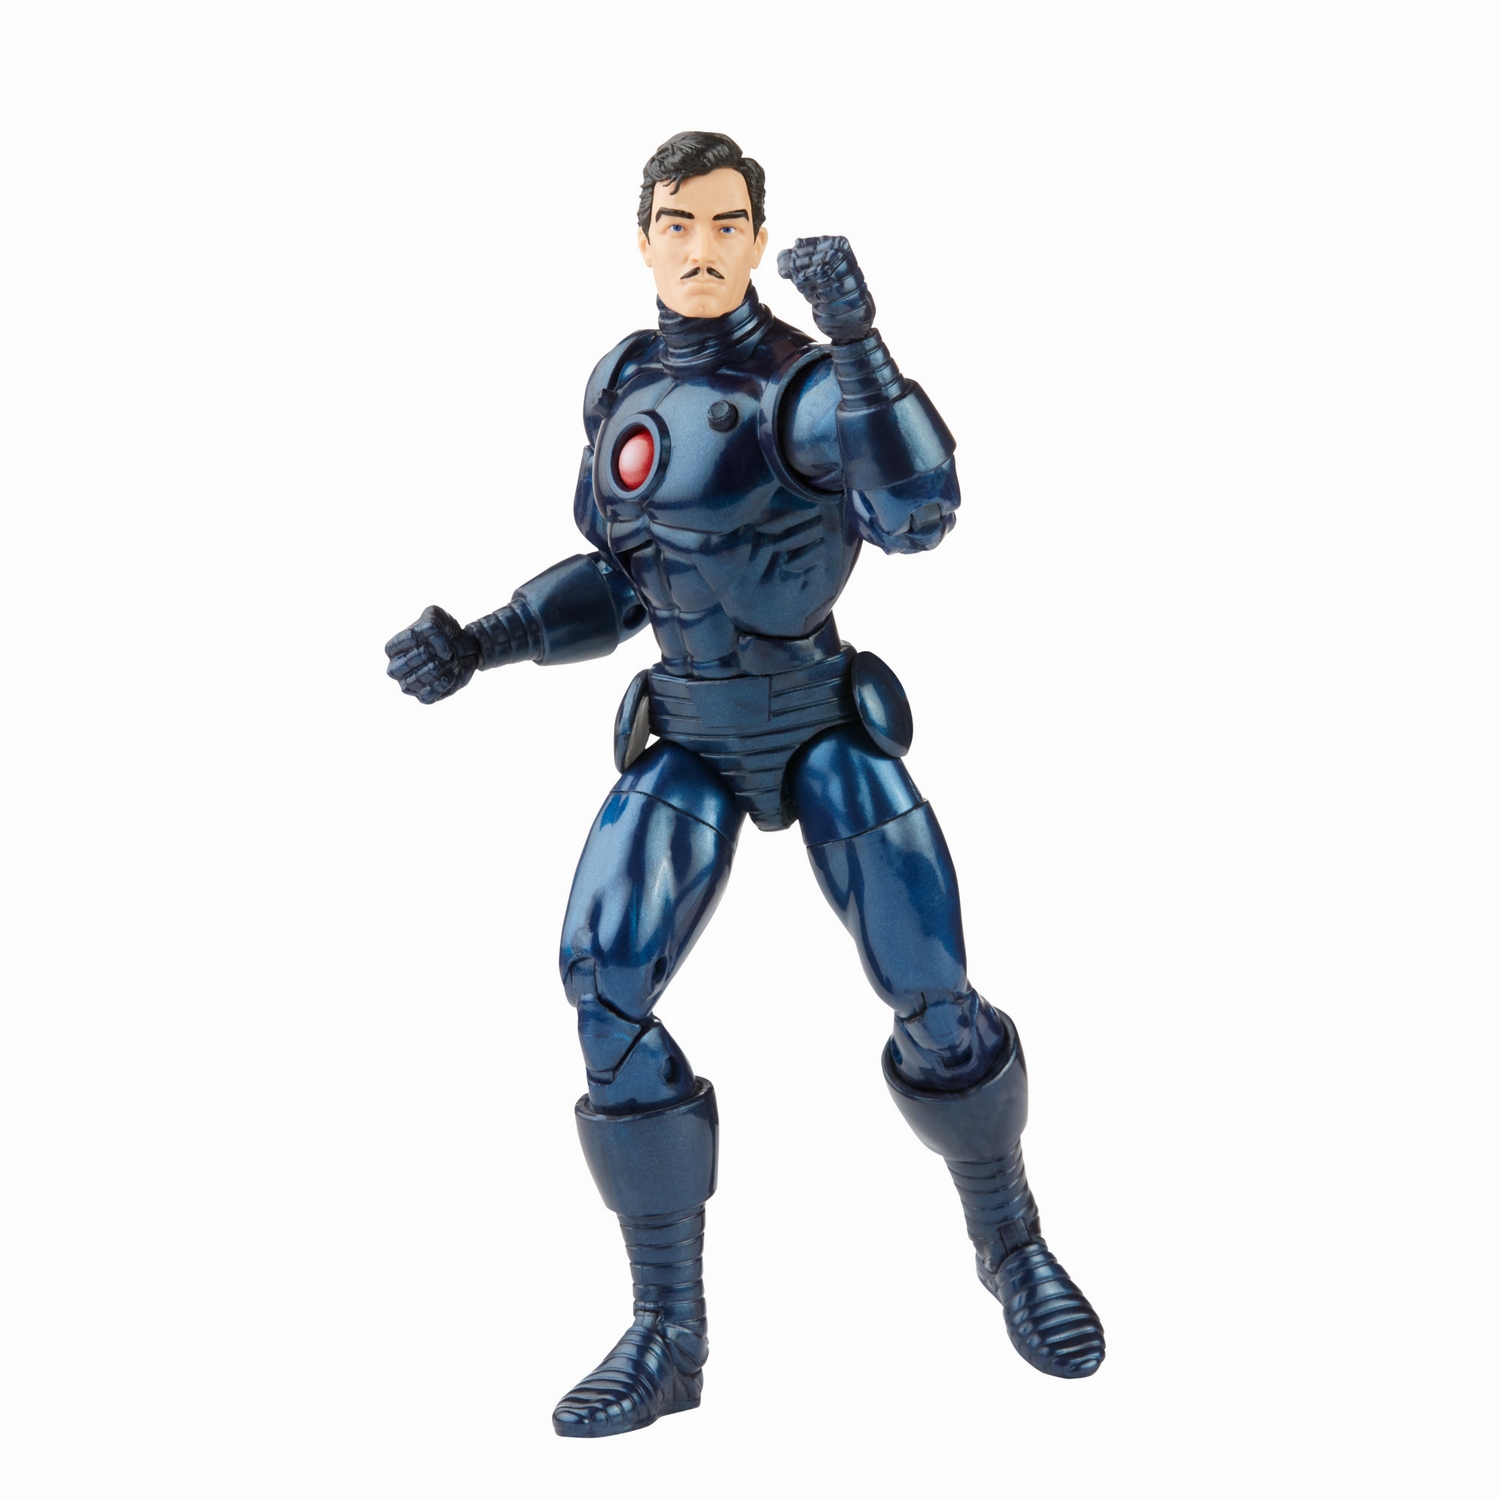 MARVEL LEGENDS SERIES 6-INCH IRON MAN Figure Assortment - Stealth Iron Man - oop (3).jpg